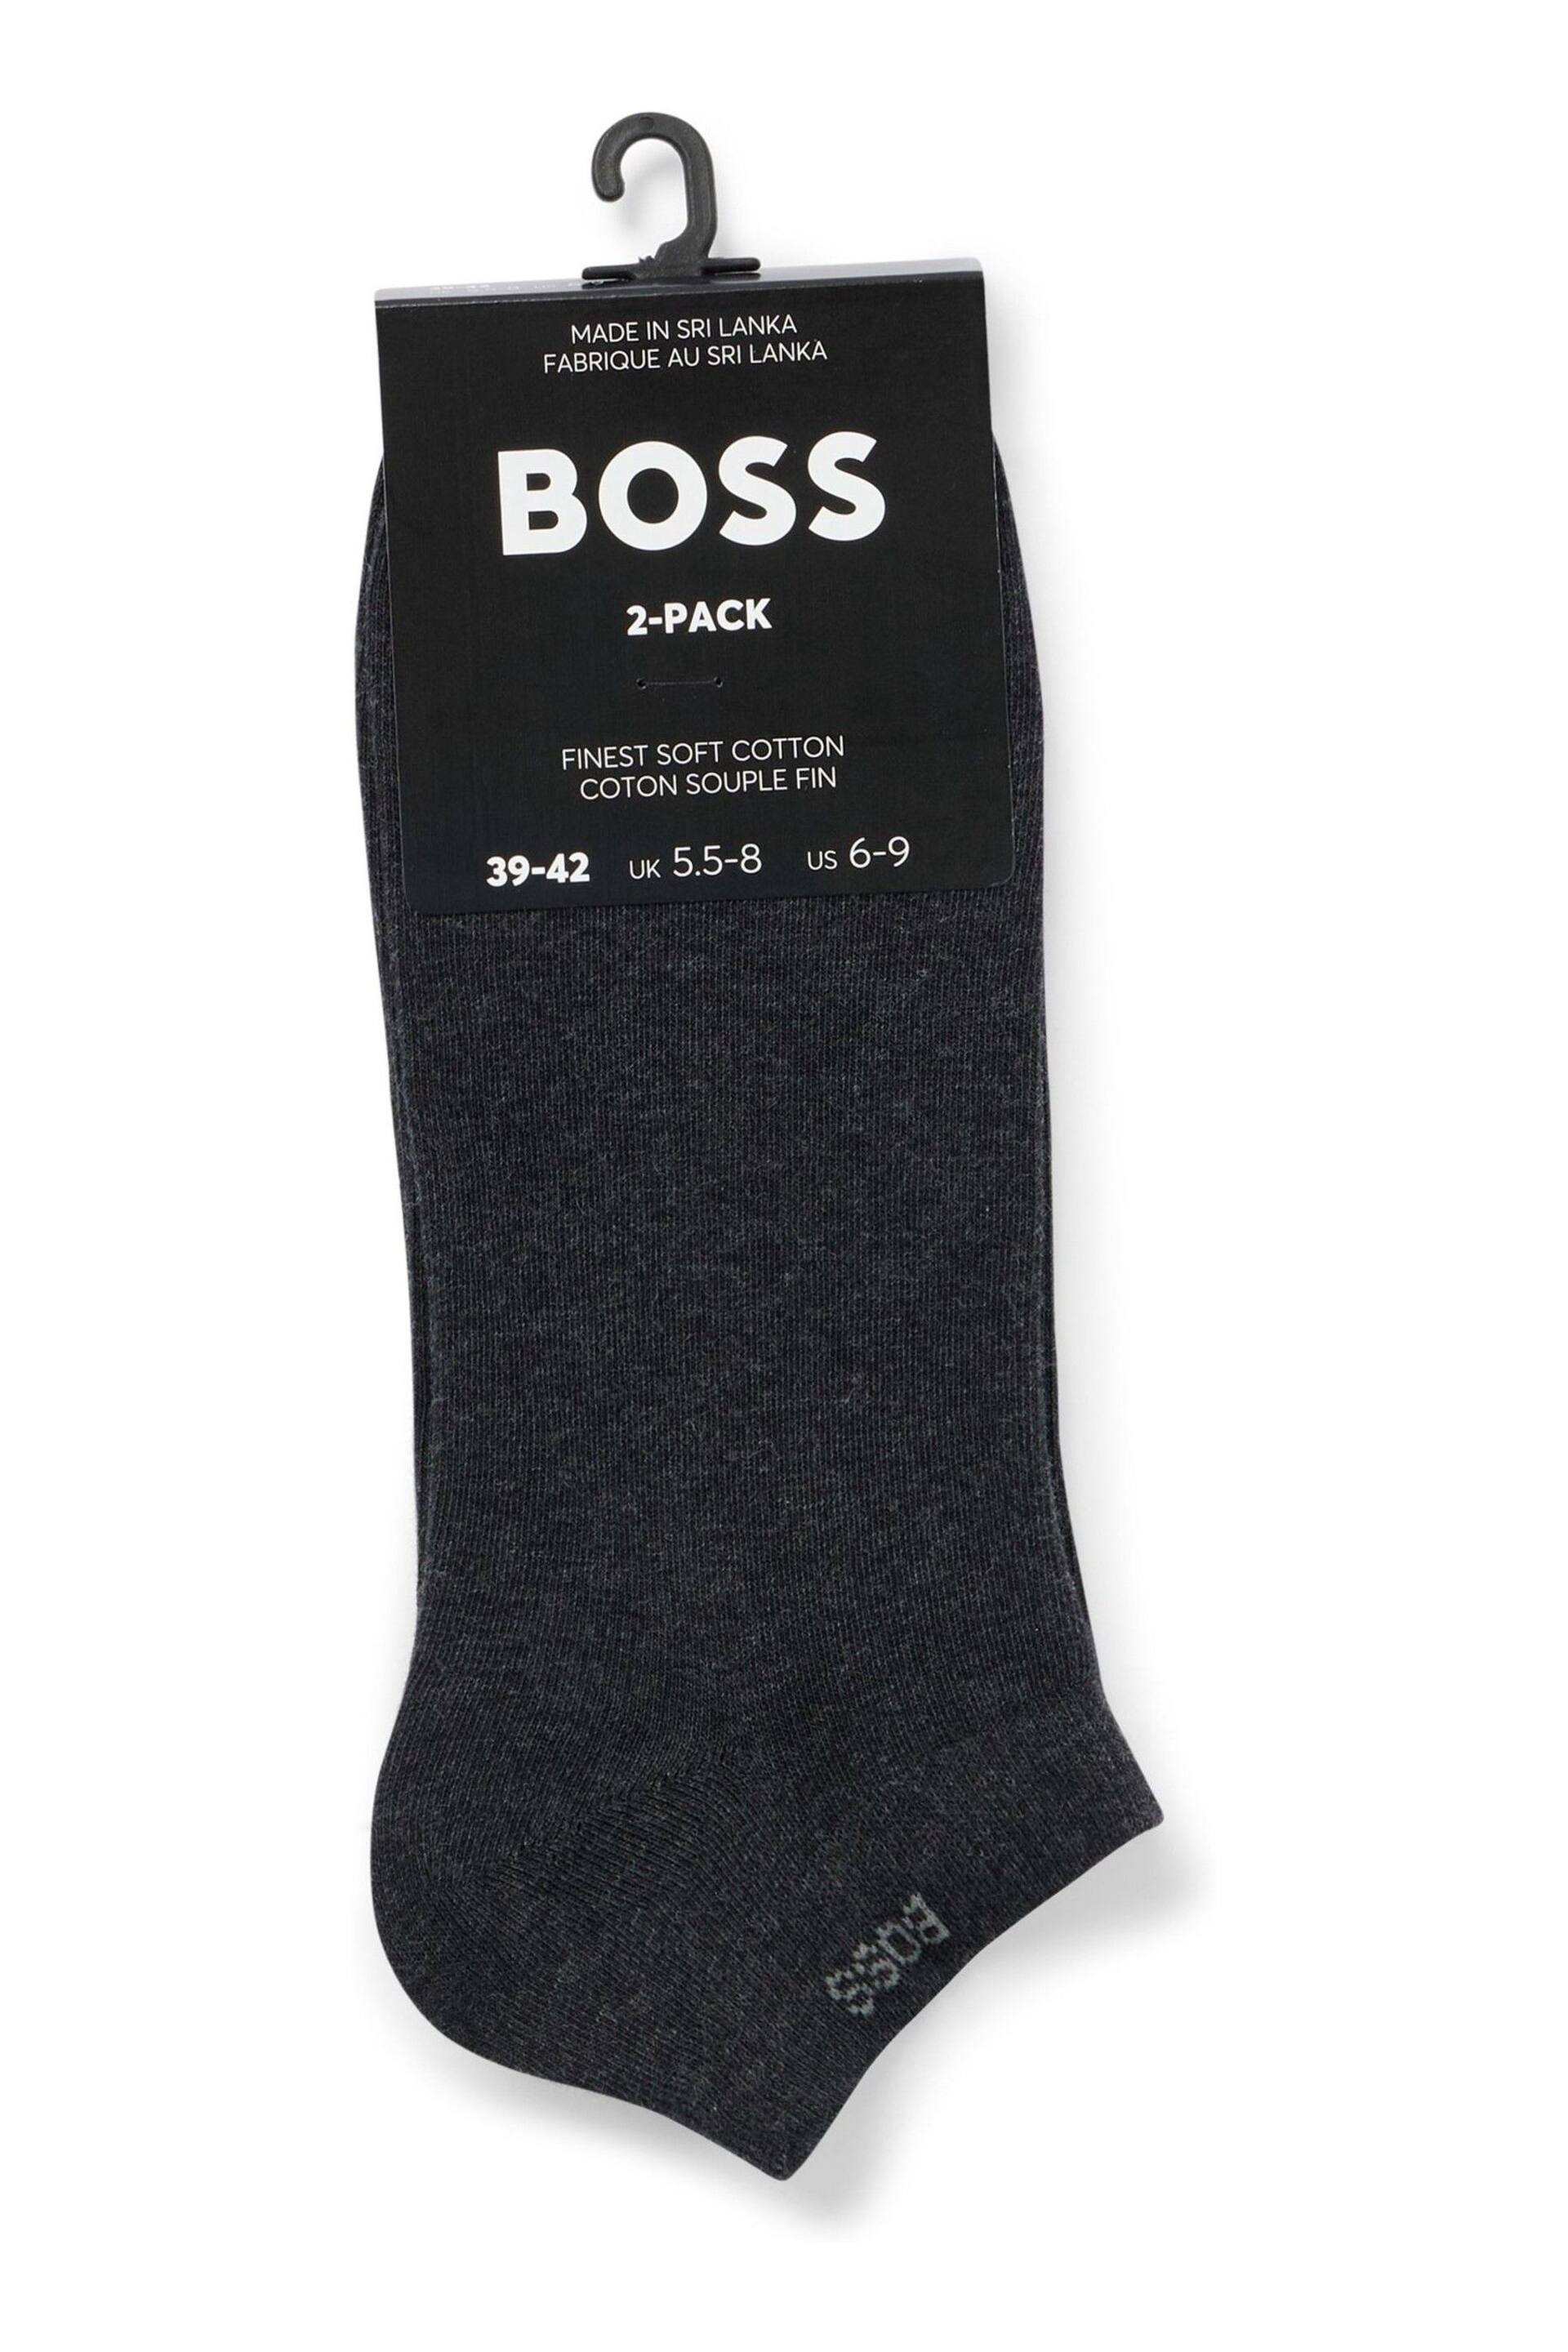 BOSS Dark Grey Ankle Socks 2 Pack - Image 2 of 3